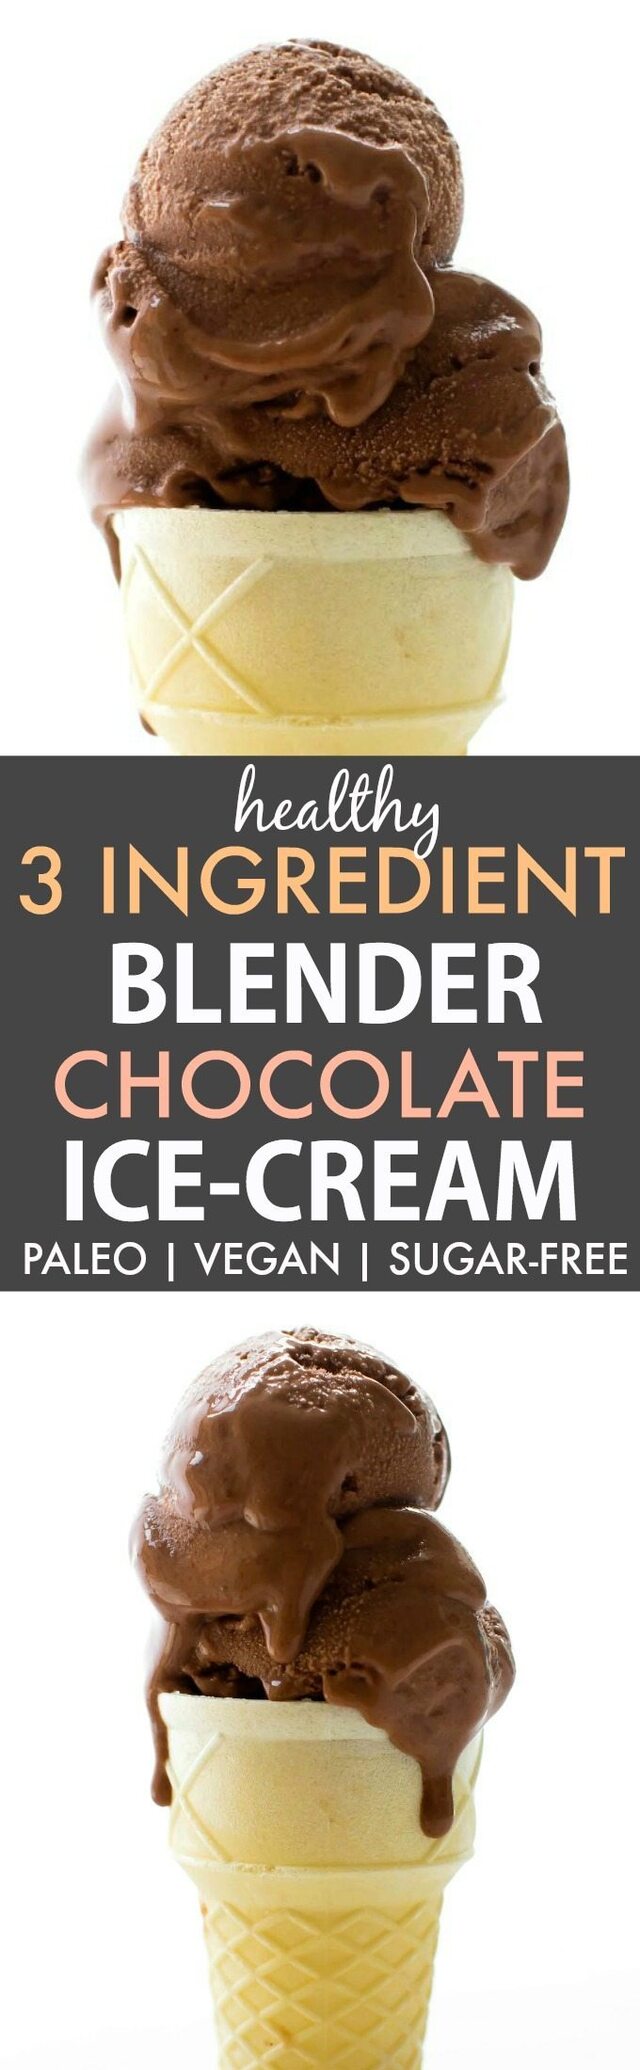 Healthy 3 Ingredient No Churn Blender Chocolate Ice Cream (Paleo, Vegan, Dairy Free)